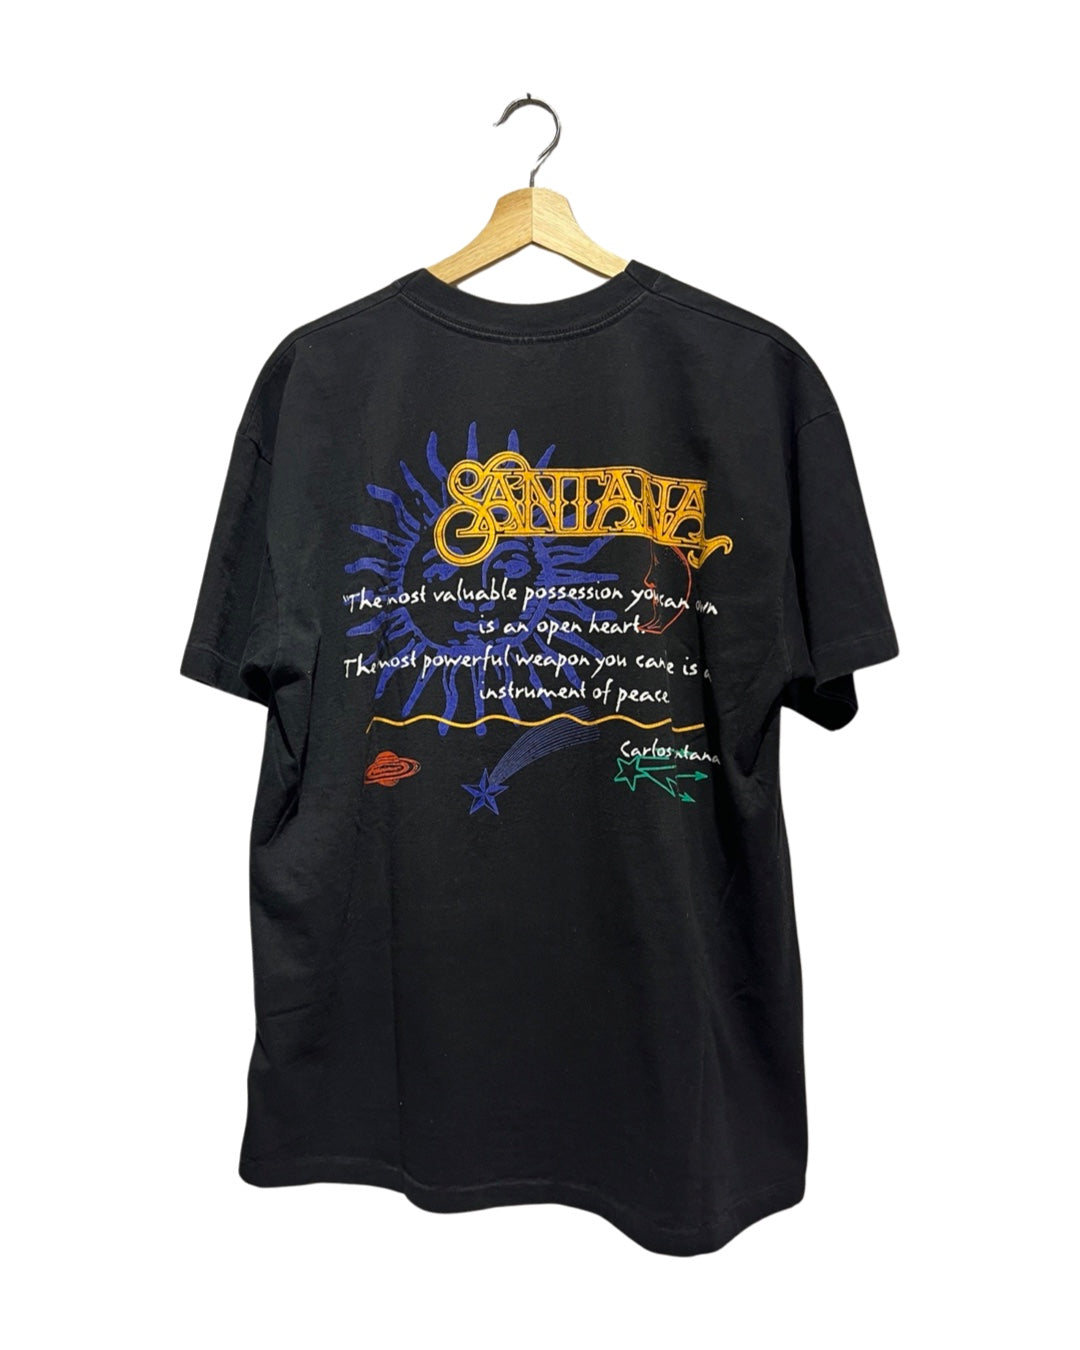 Vintage 1996 Carlos Santana Tour Tee